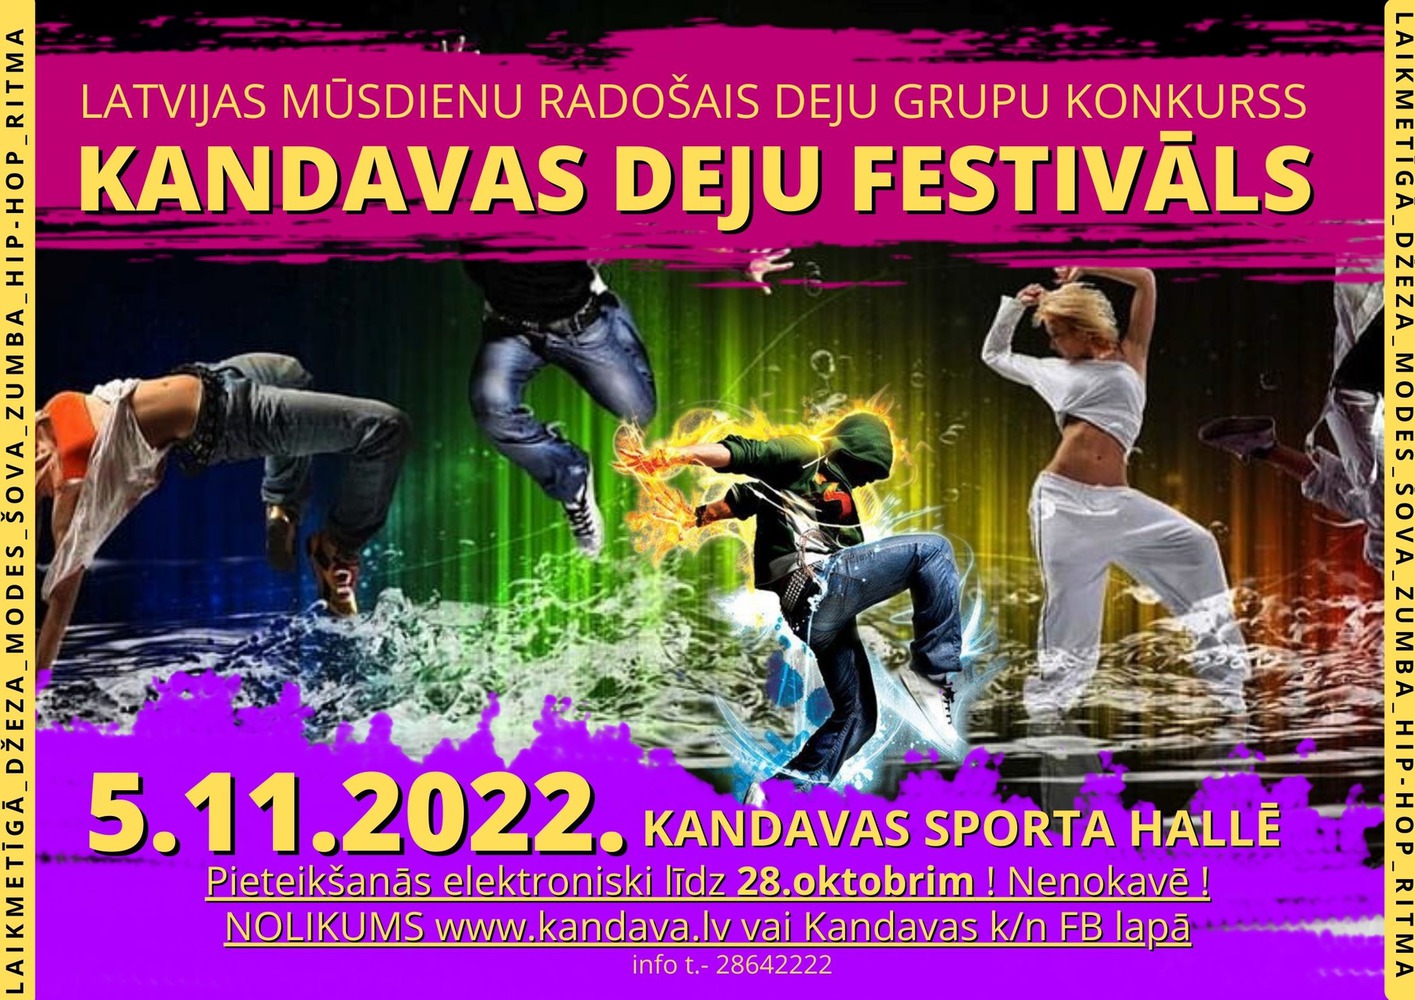 kandavas-deju-festivals-1.jpg